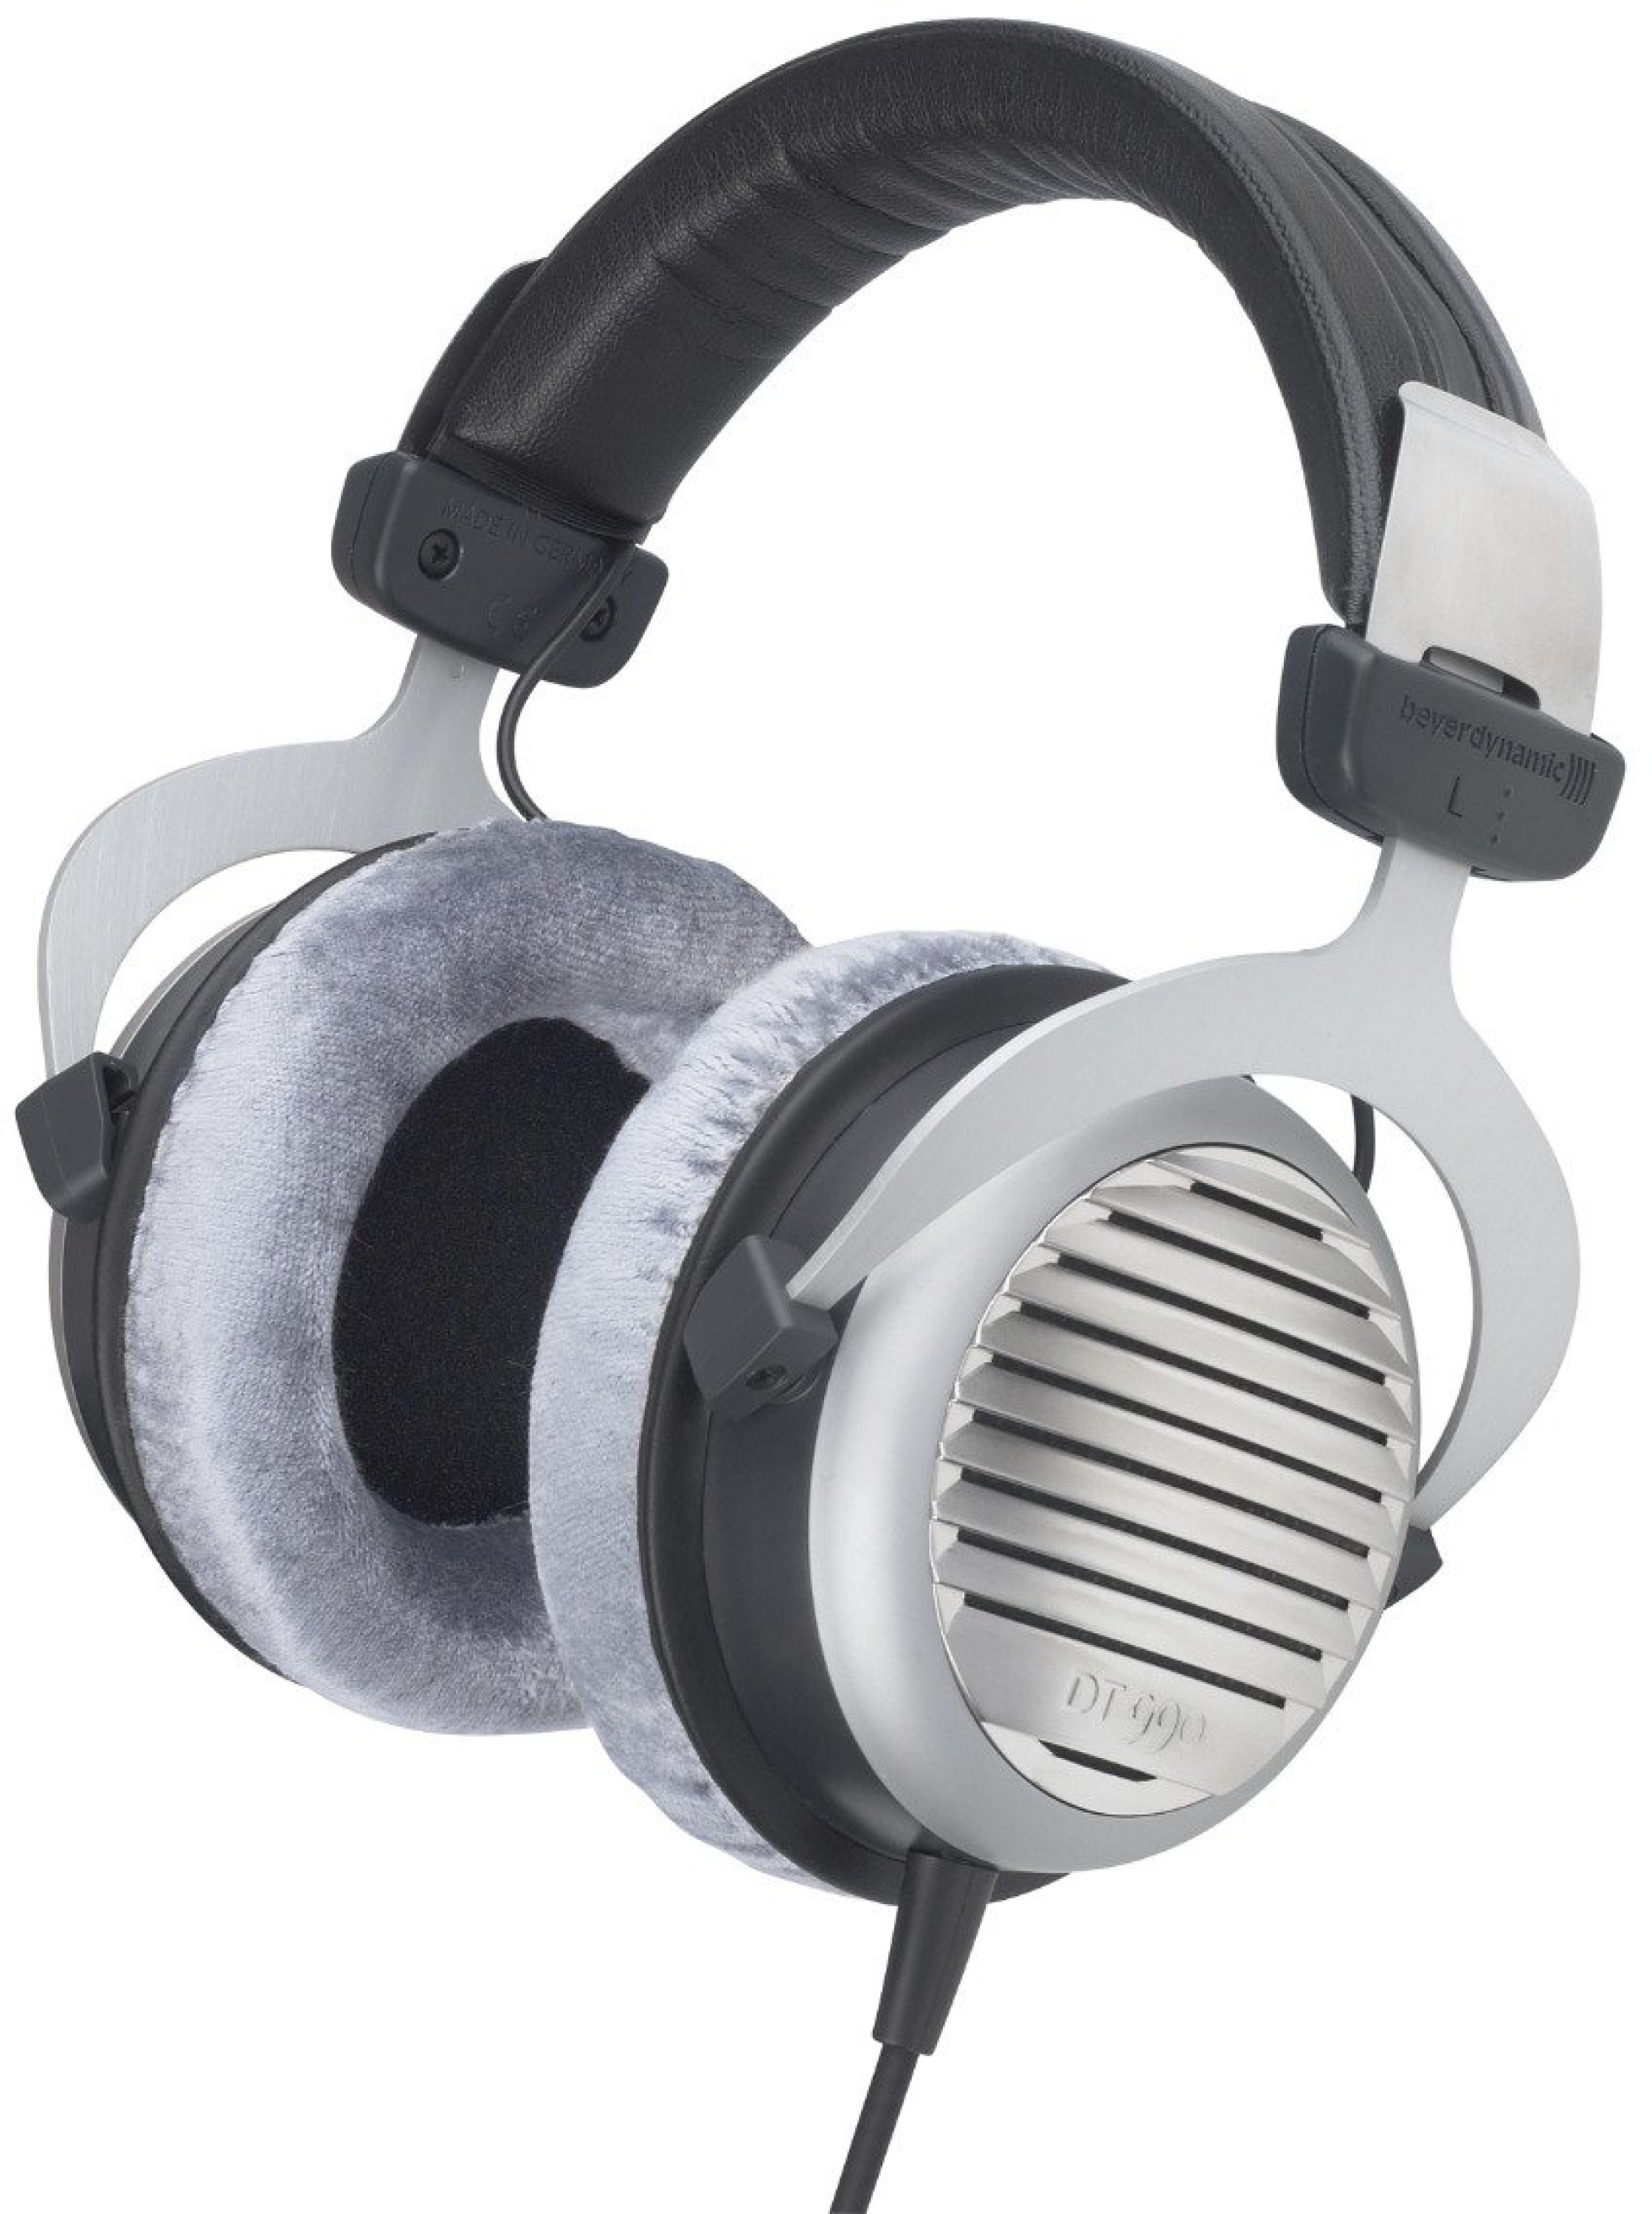 Beyerdynamic DT-990 Pro Acoustically Open Headphones Limited Edition Bundle